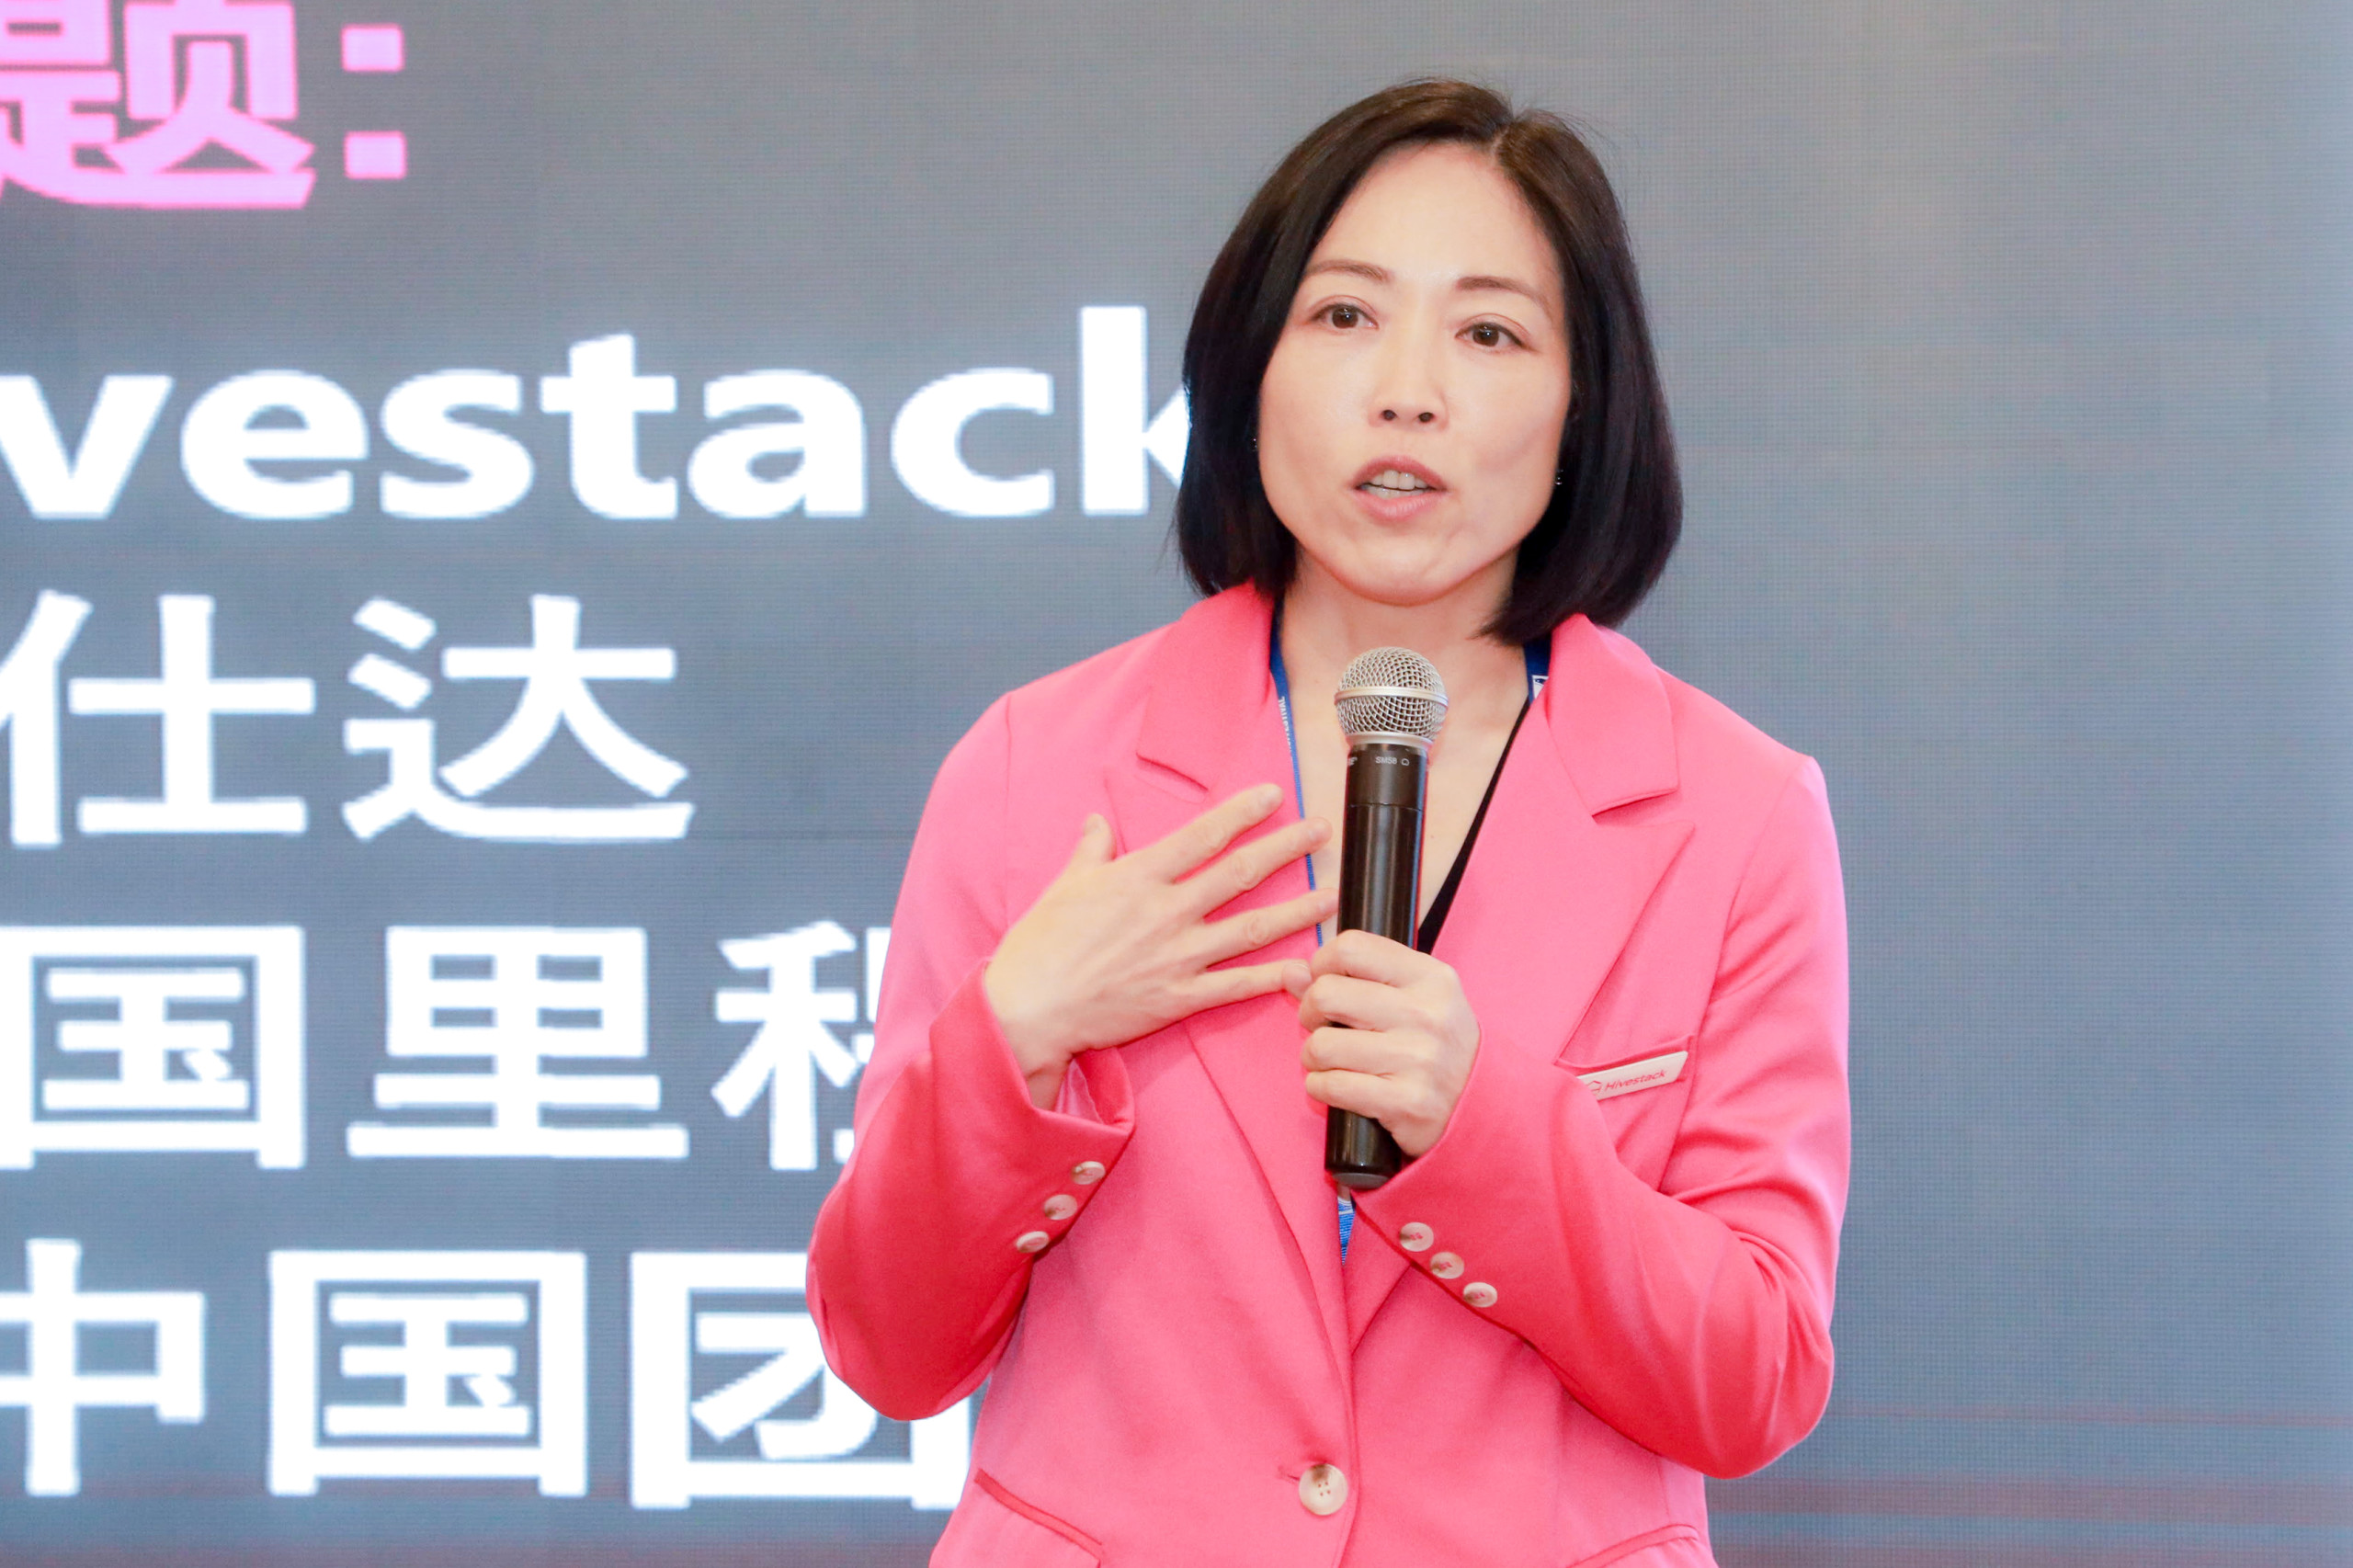 Ms. Gu Shiyi (Aileen Ku), General Manager of Hivestack China, giving a speech